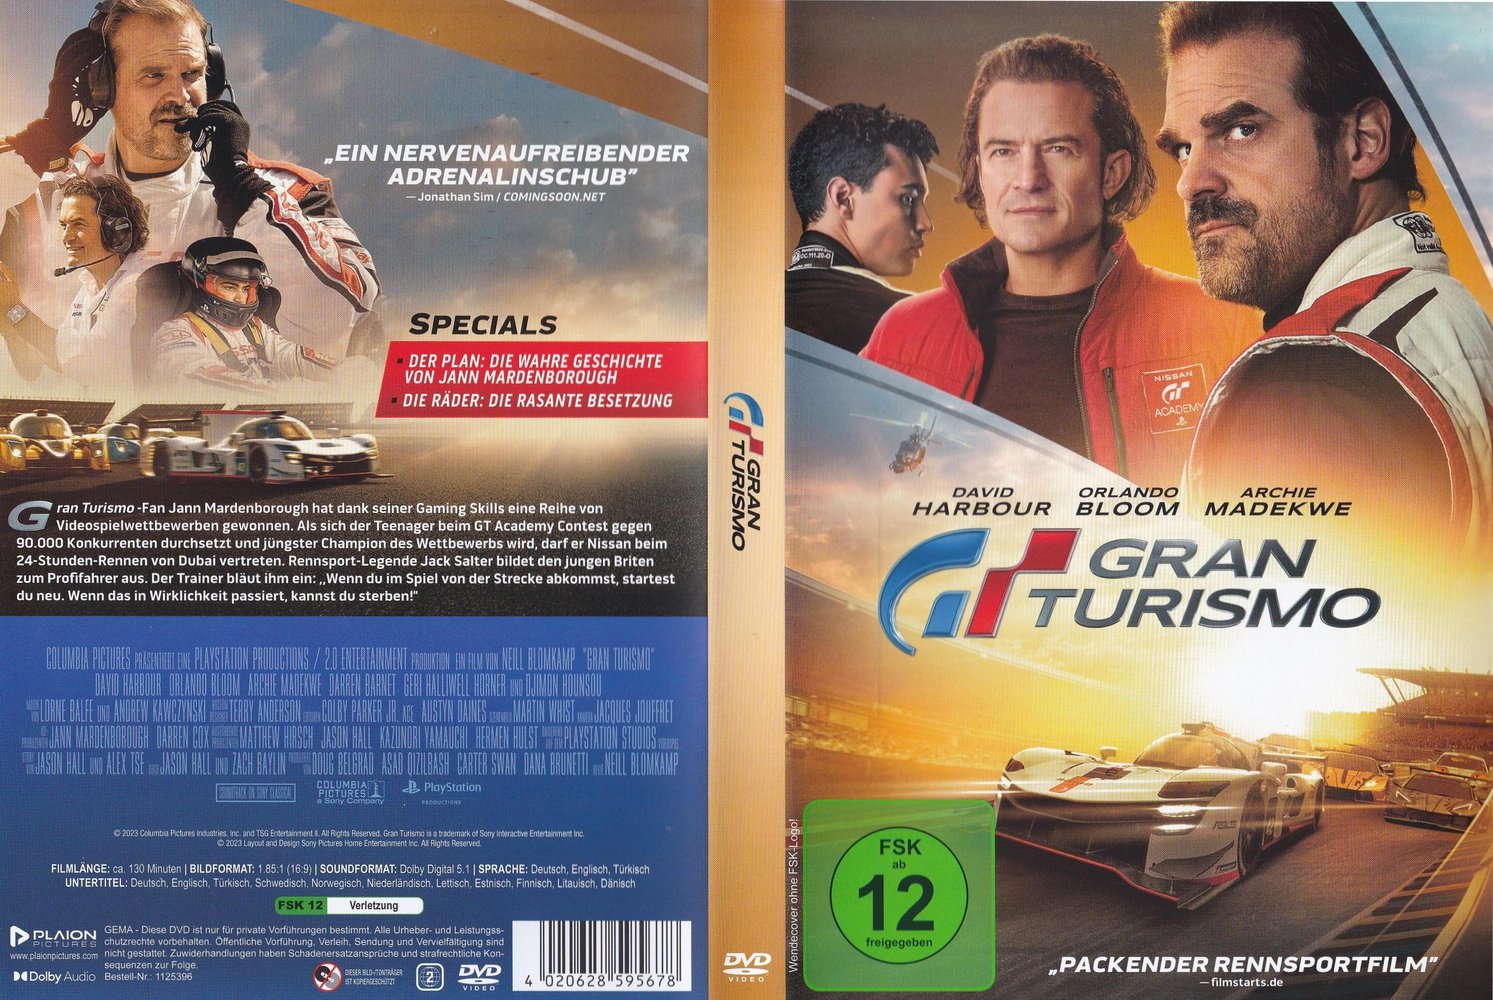 Gran Turismo - DVD + Digital